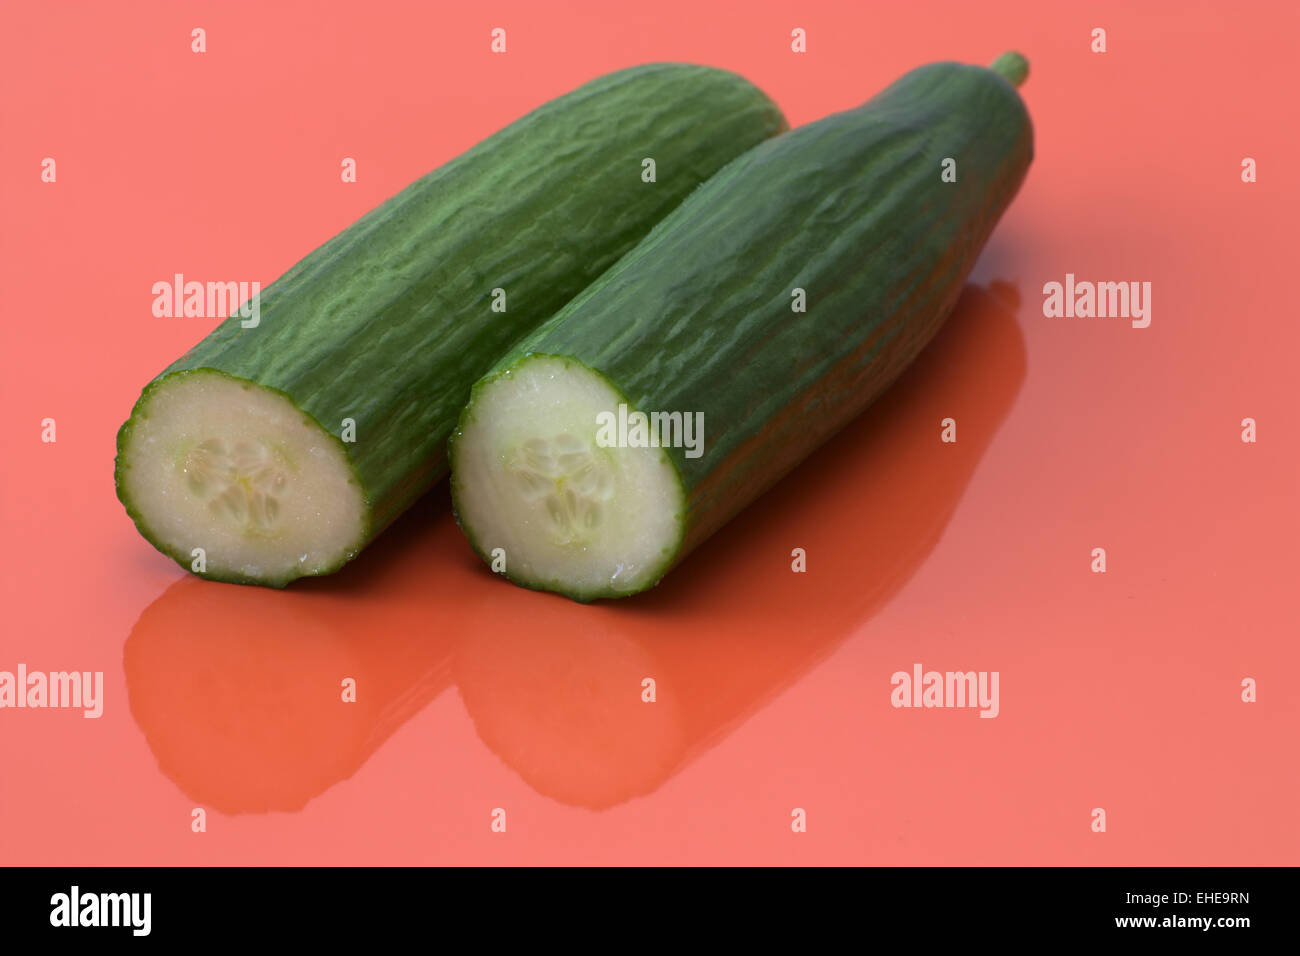 Gurken - Cucumbers Stock Photo